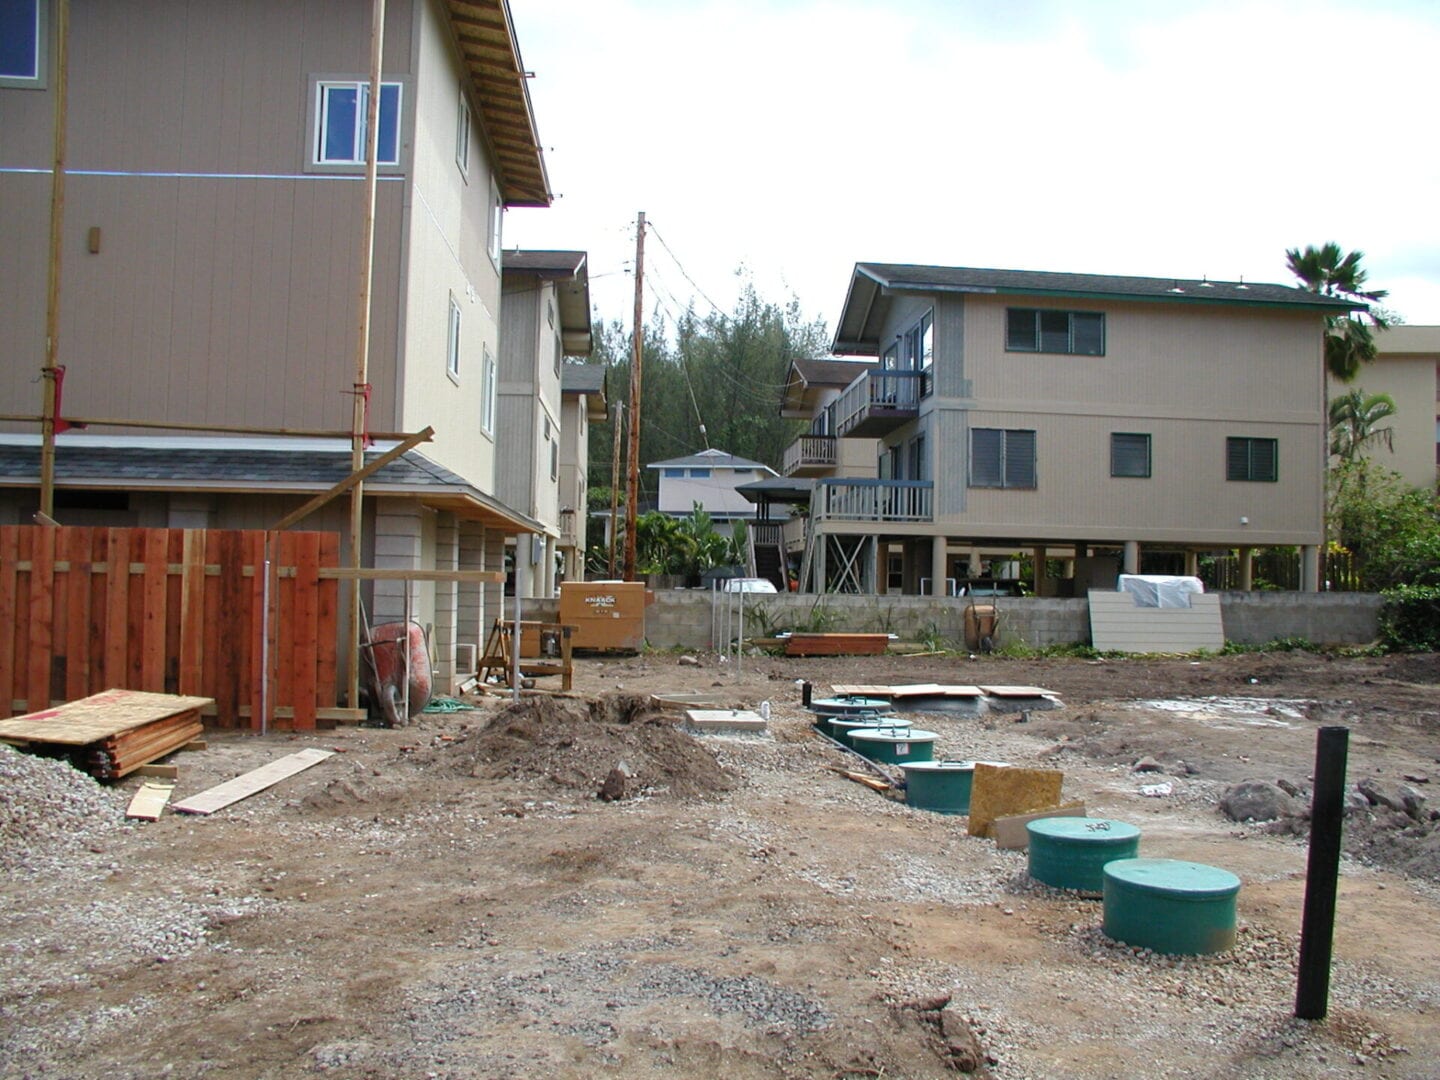 Wastewater treatment in Waialua Ocean Villas